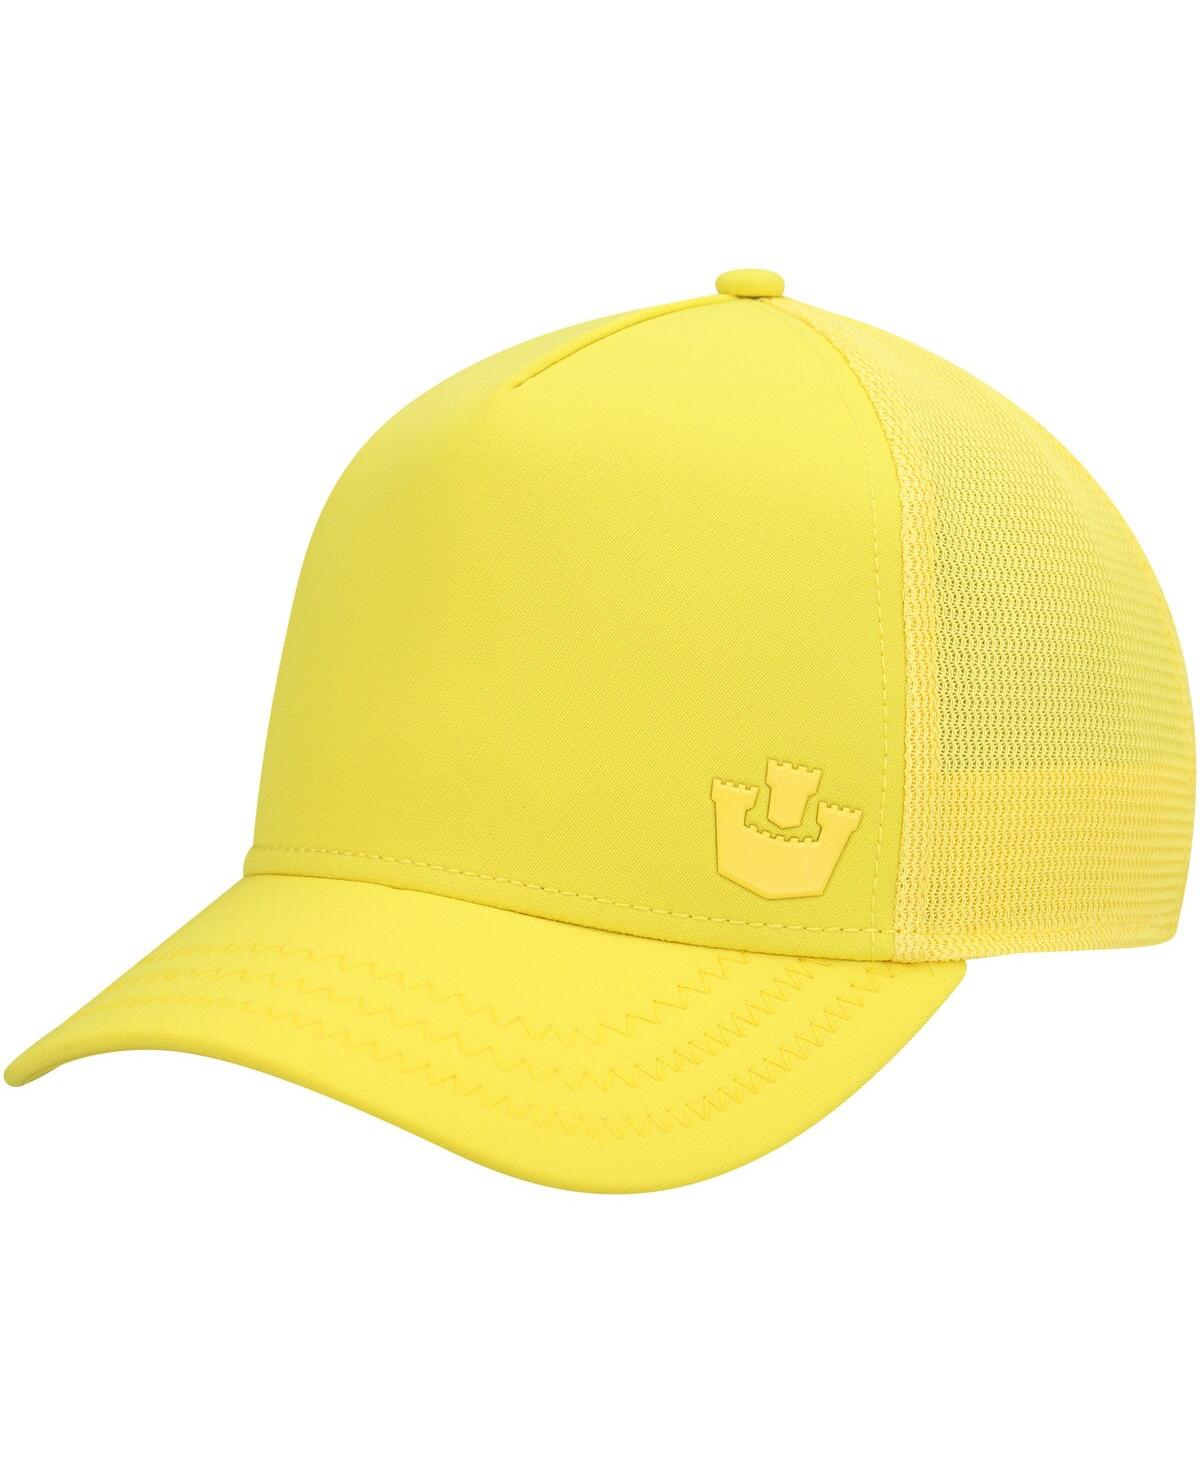 Goorin Bros Men's . Yellow Gateway Trucker Snapback Hat